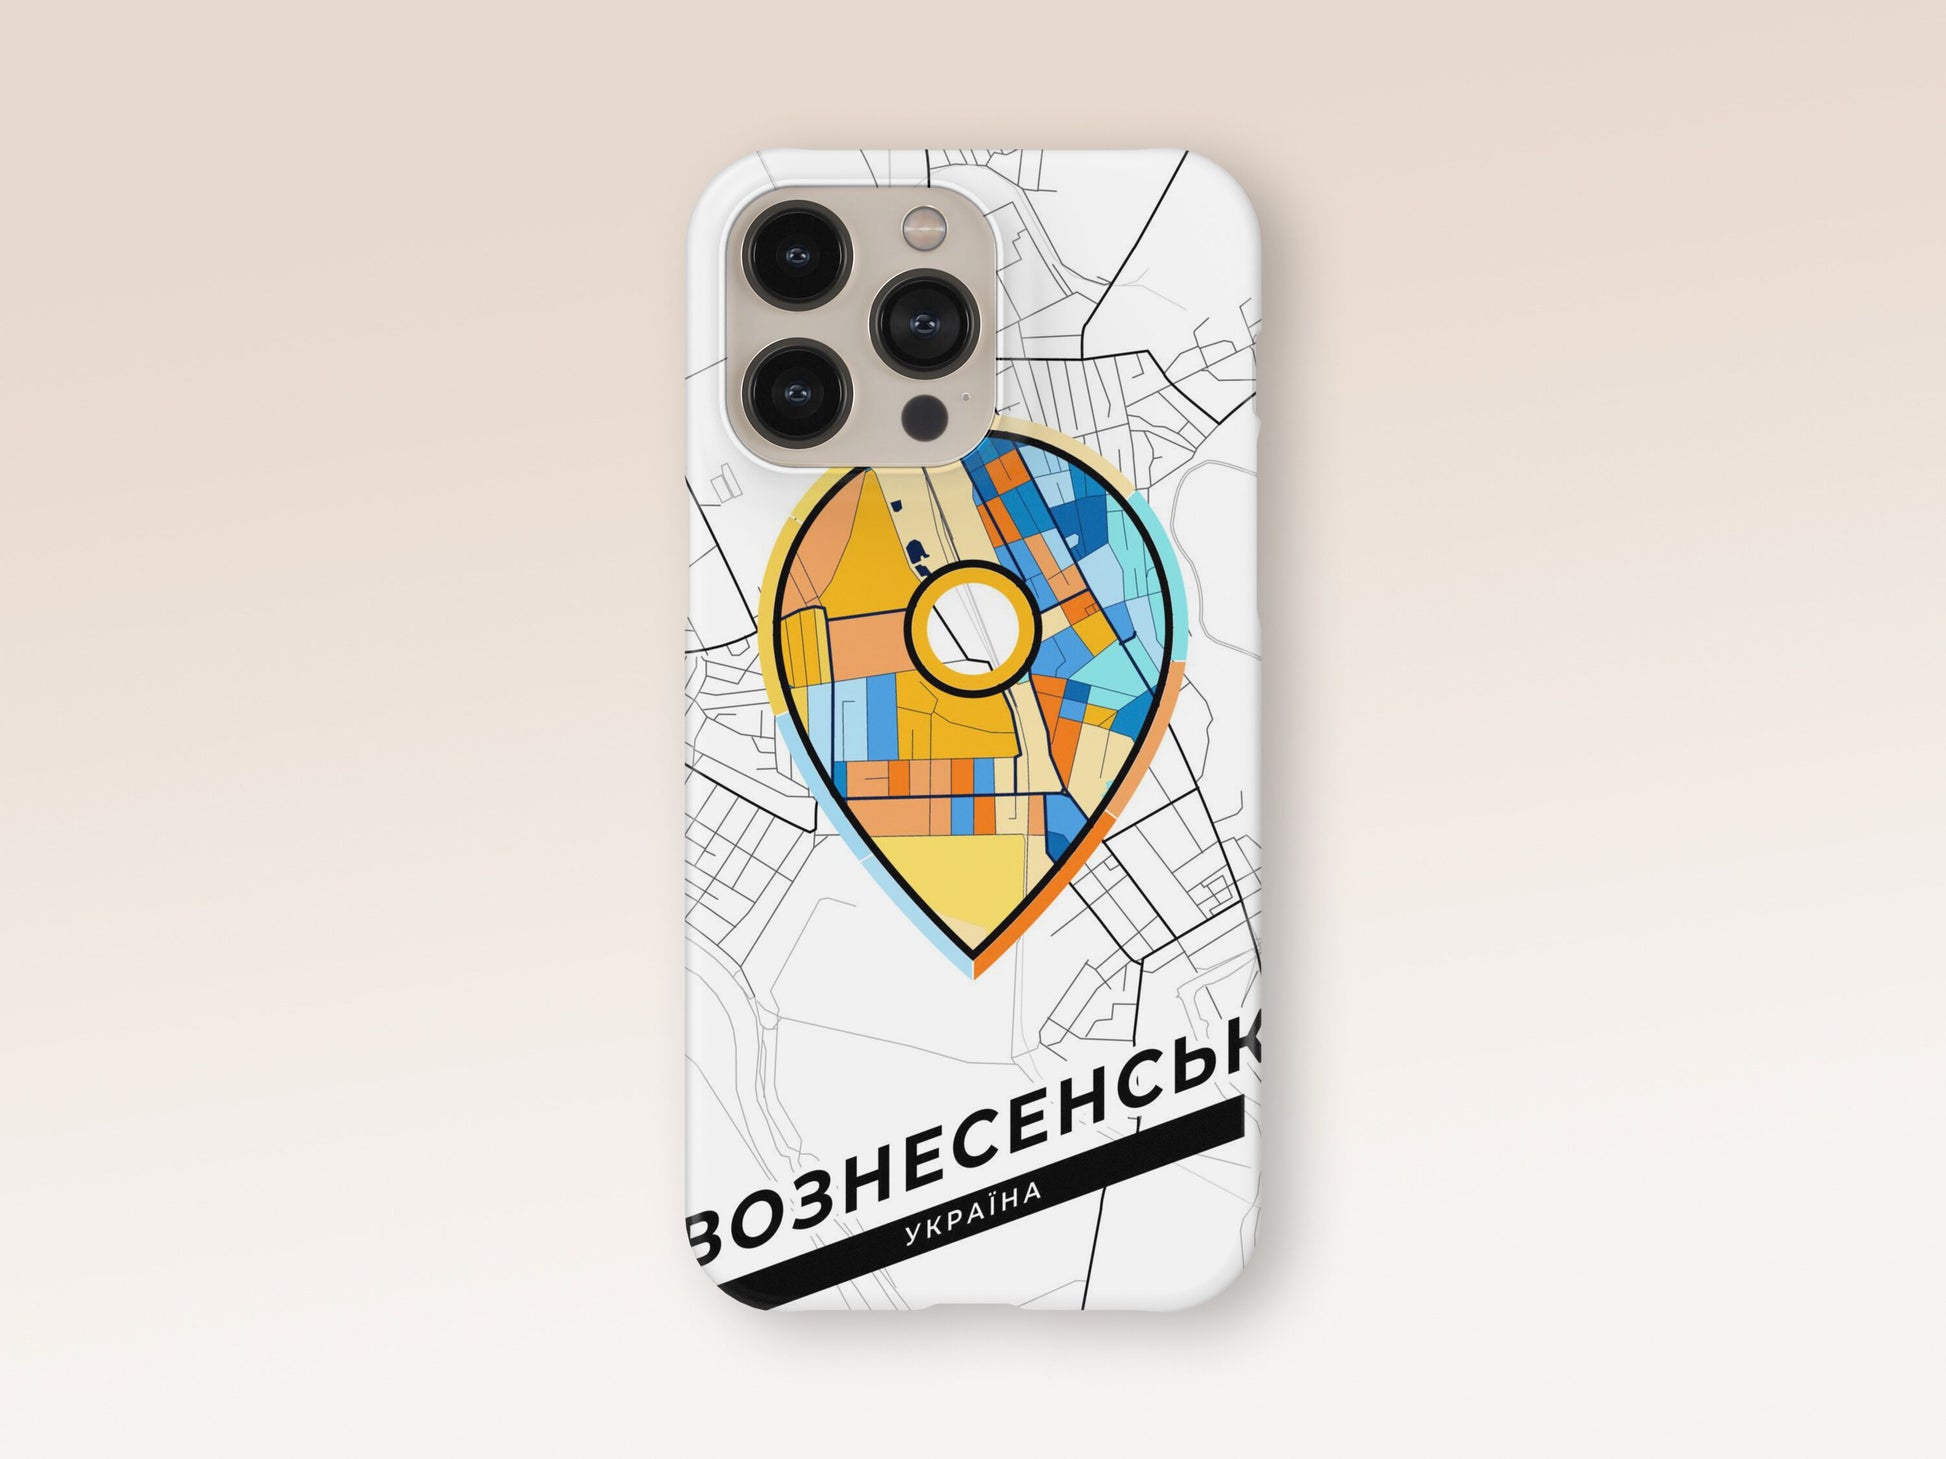 Voznesensk Ukraine slim phone case with colorful icon 1